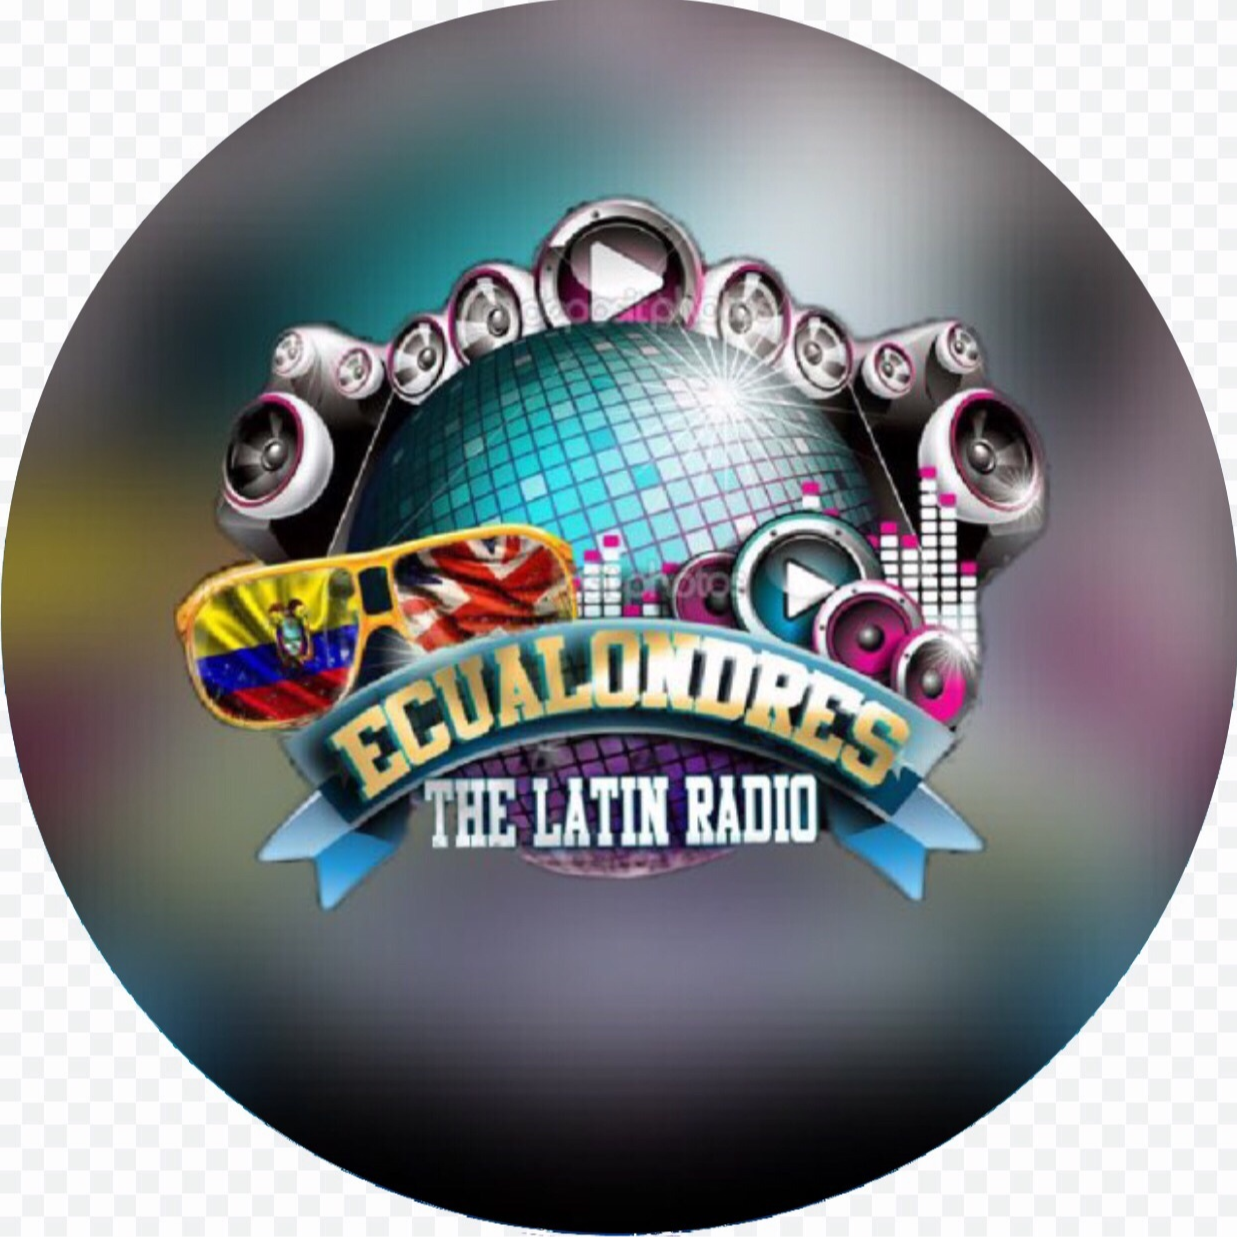 Ecualondre The Latin Radio